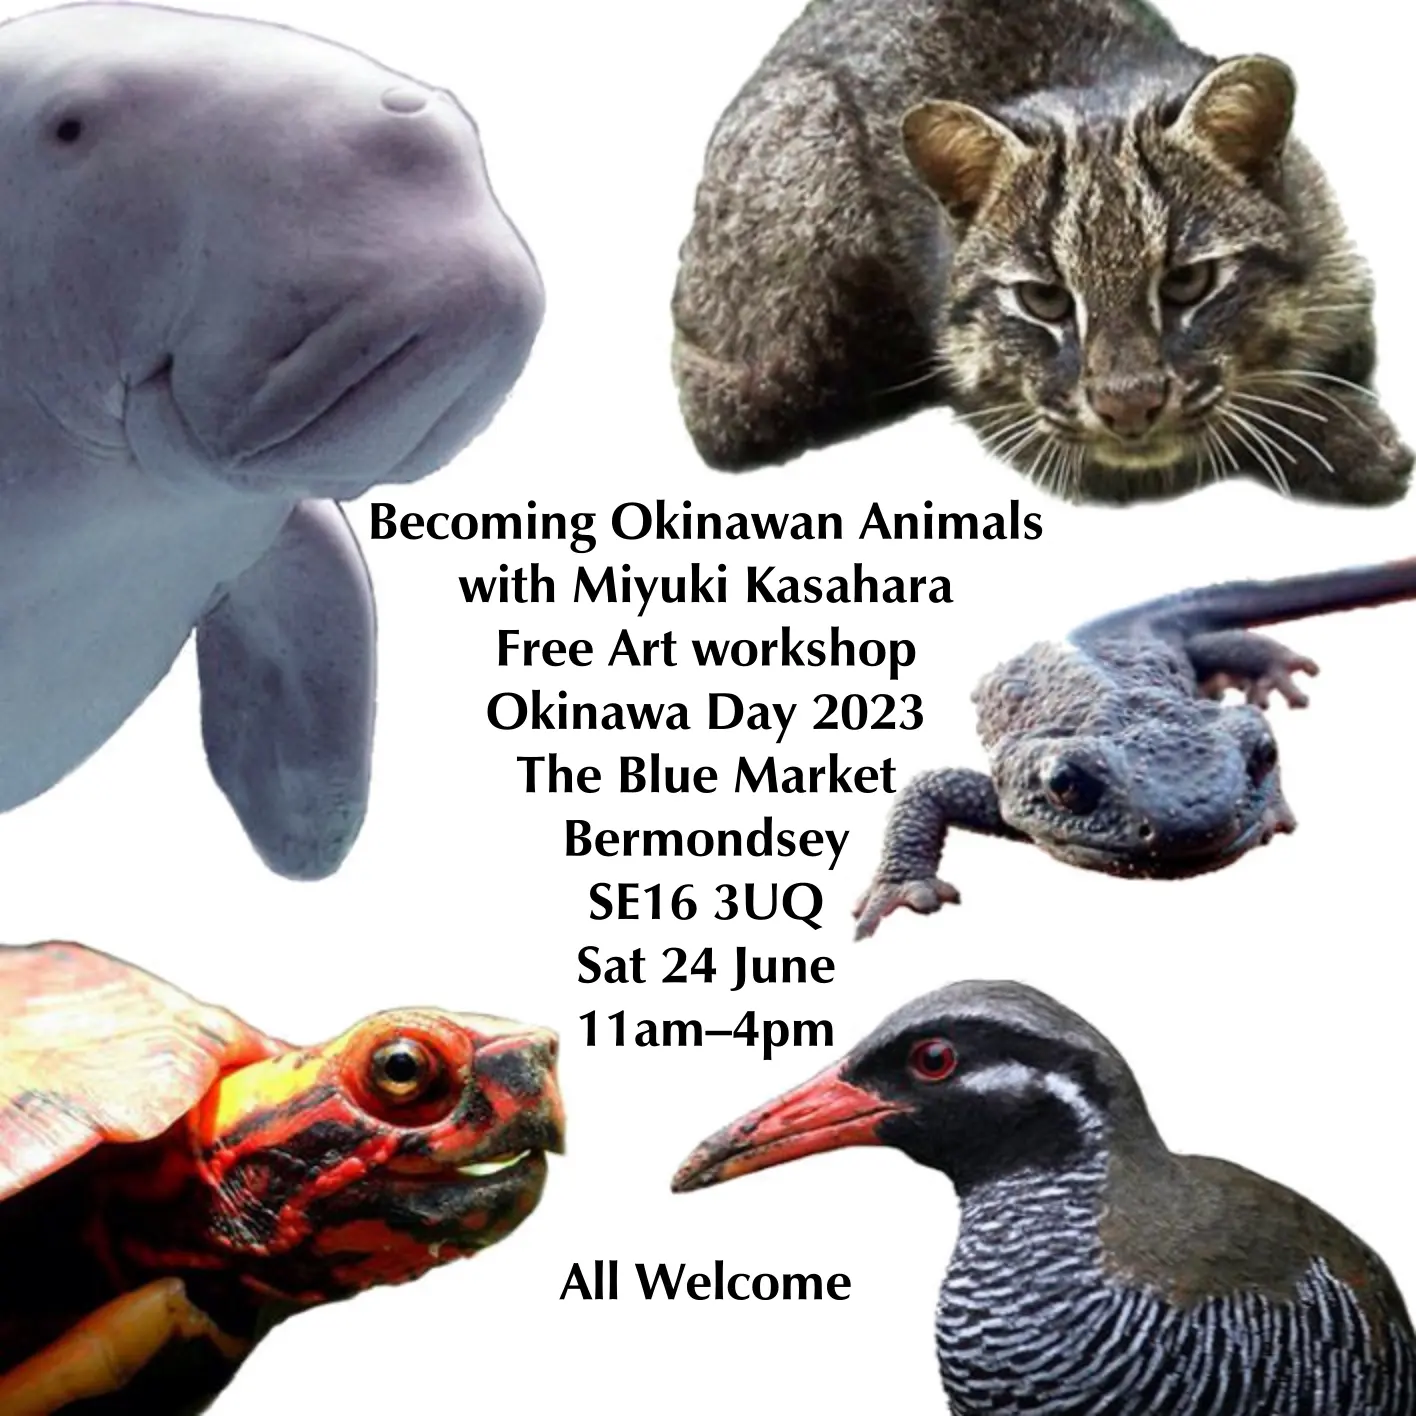 Becoming Okinawan Animals with Miyuki Kasahara. Free Art workshop 11am–4pm.
All Welcome